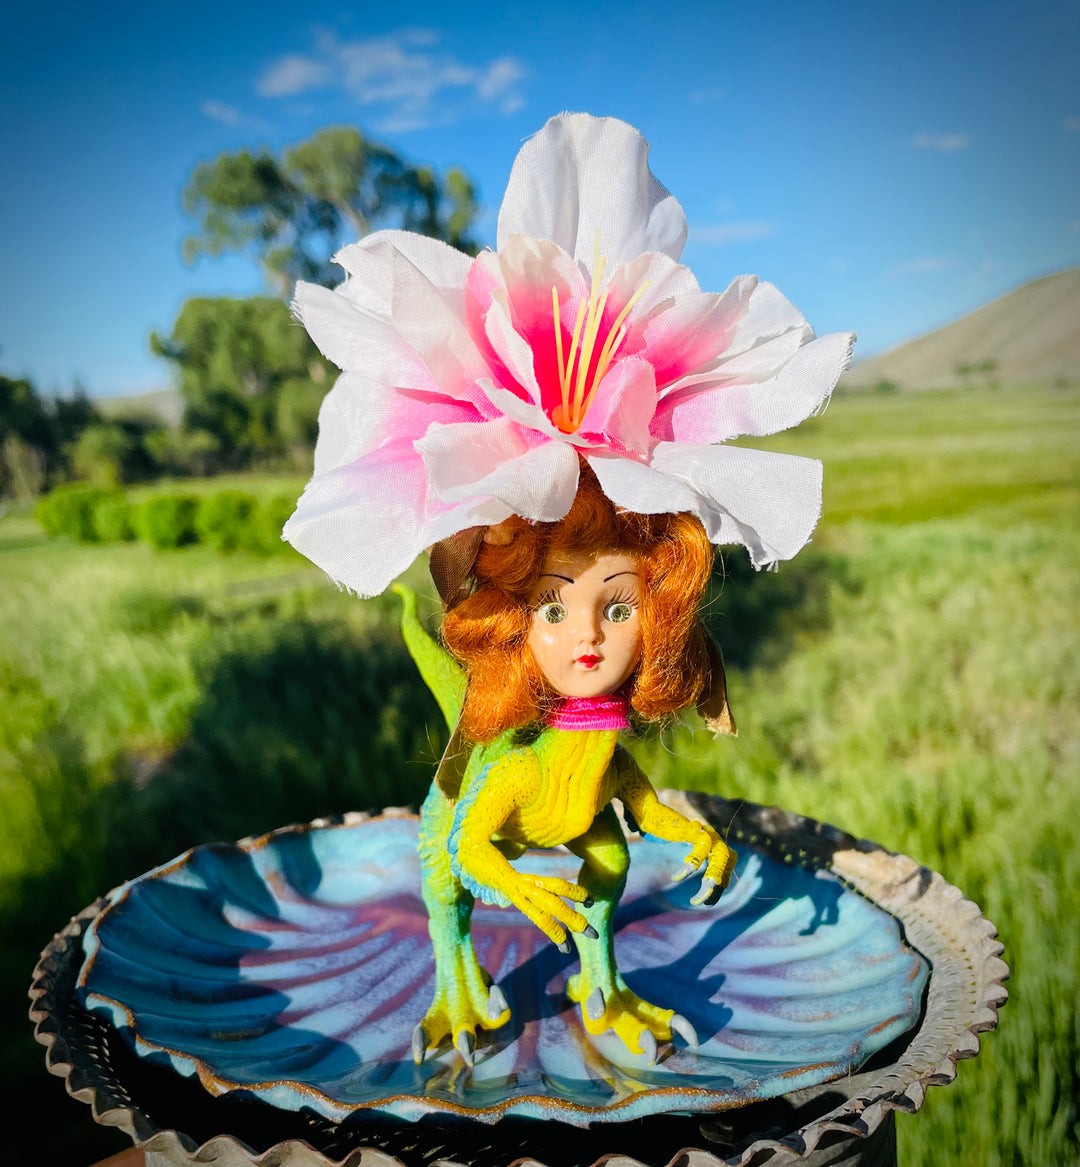 Vintage doll head with flower headdress on toy dinosaur body. 